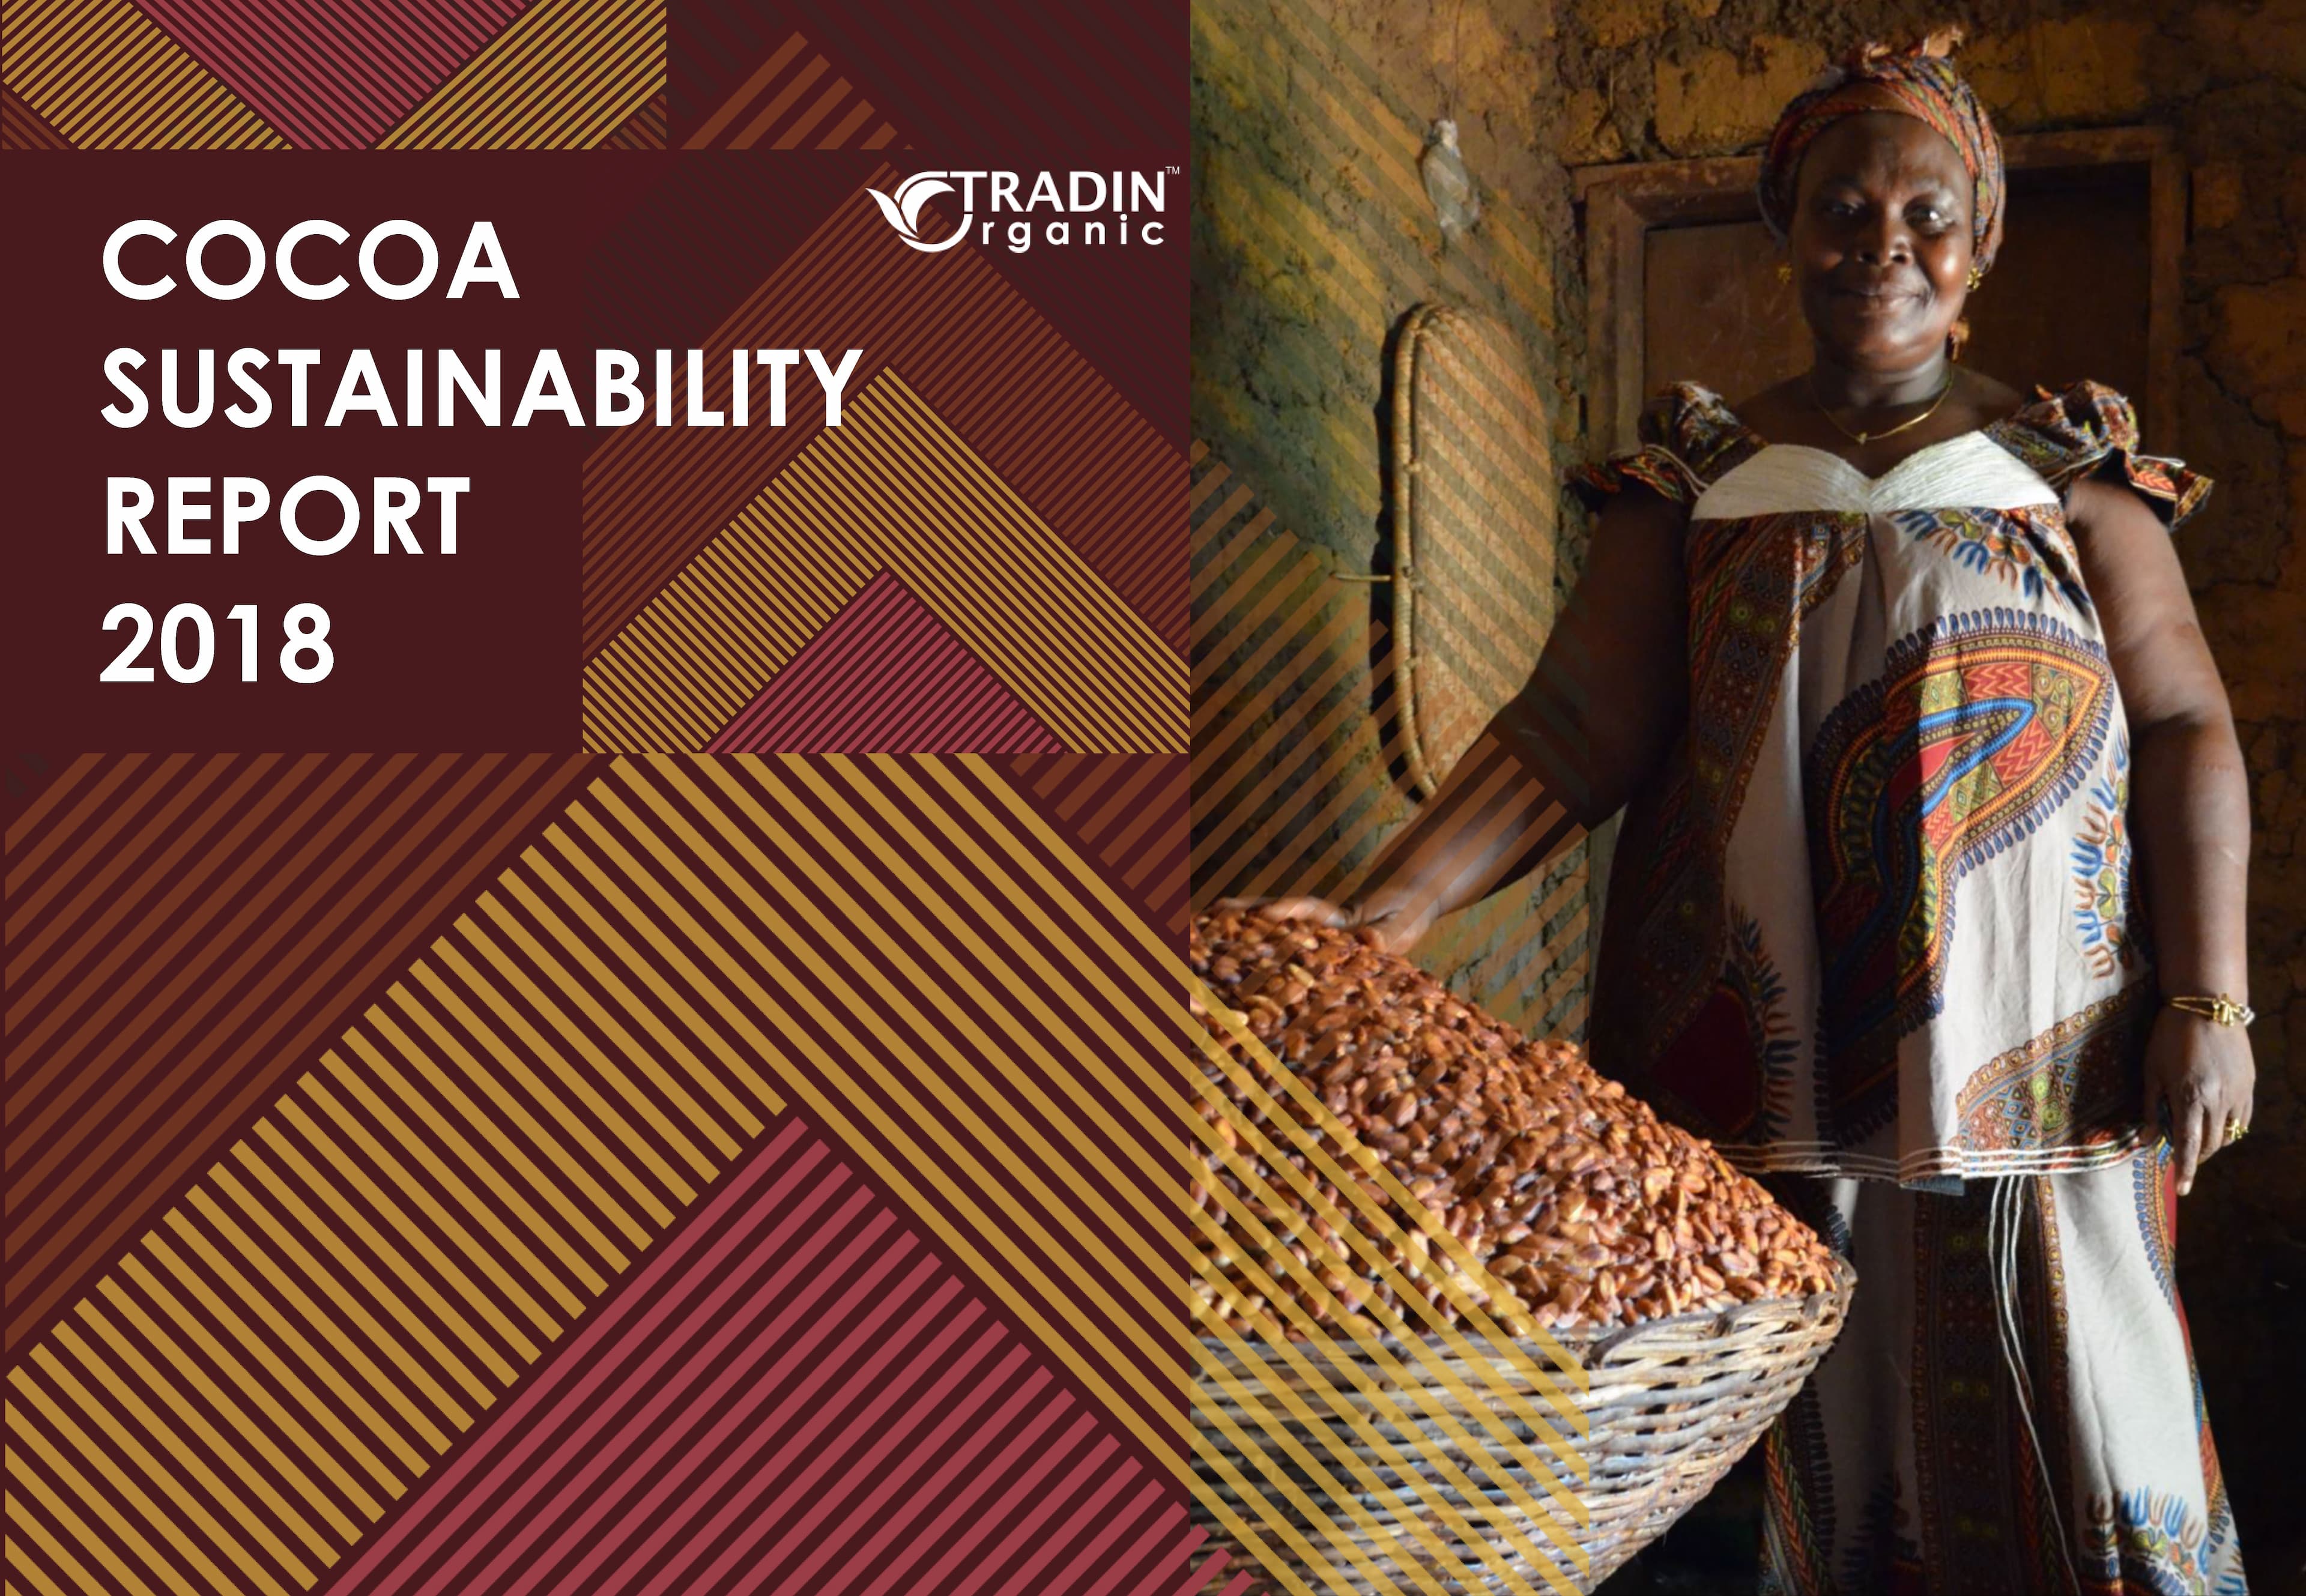 Tradin Organic Launches Cocoa Sustainability Report